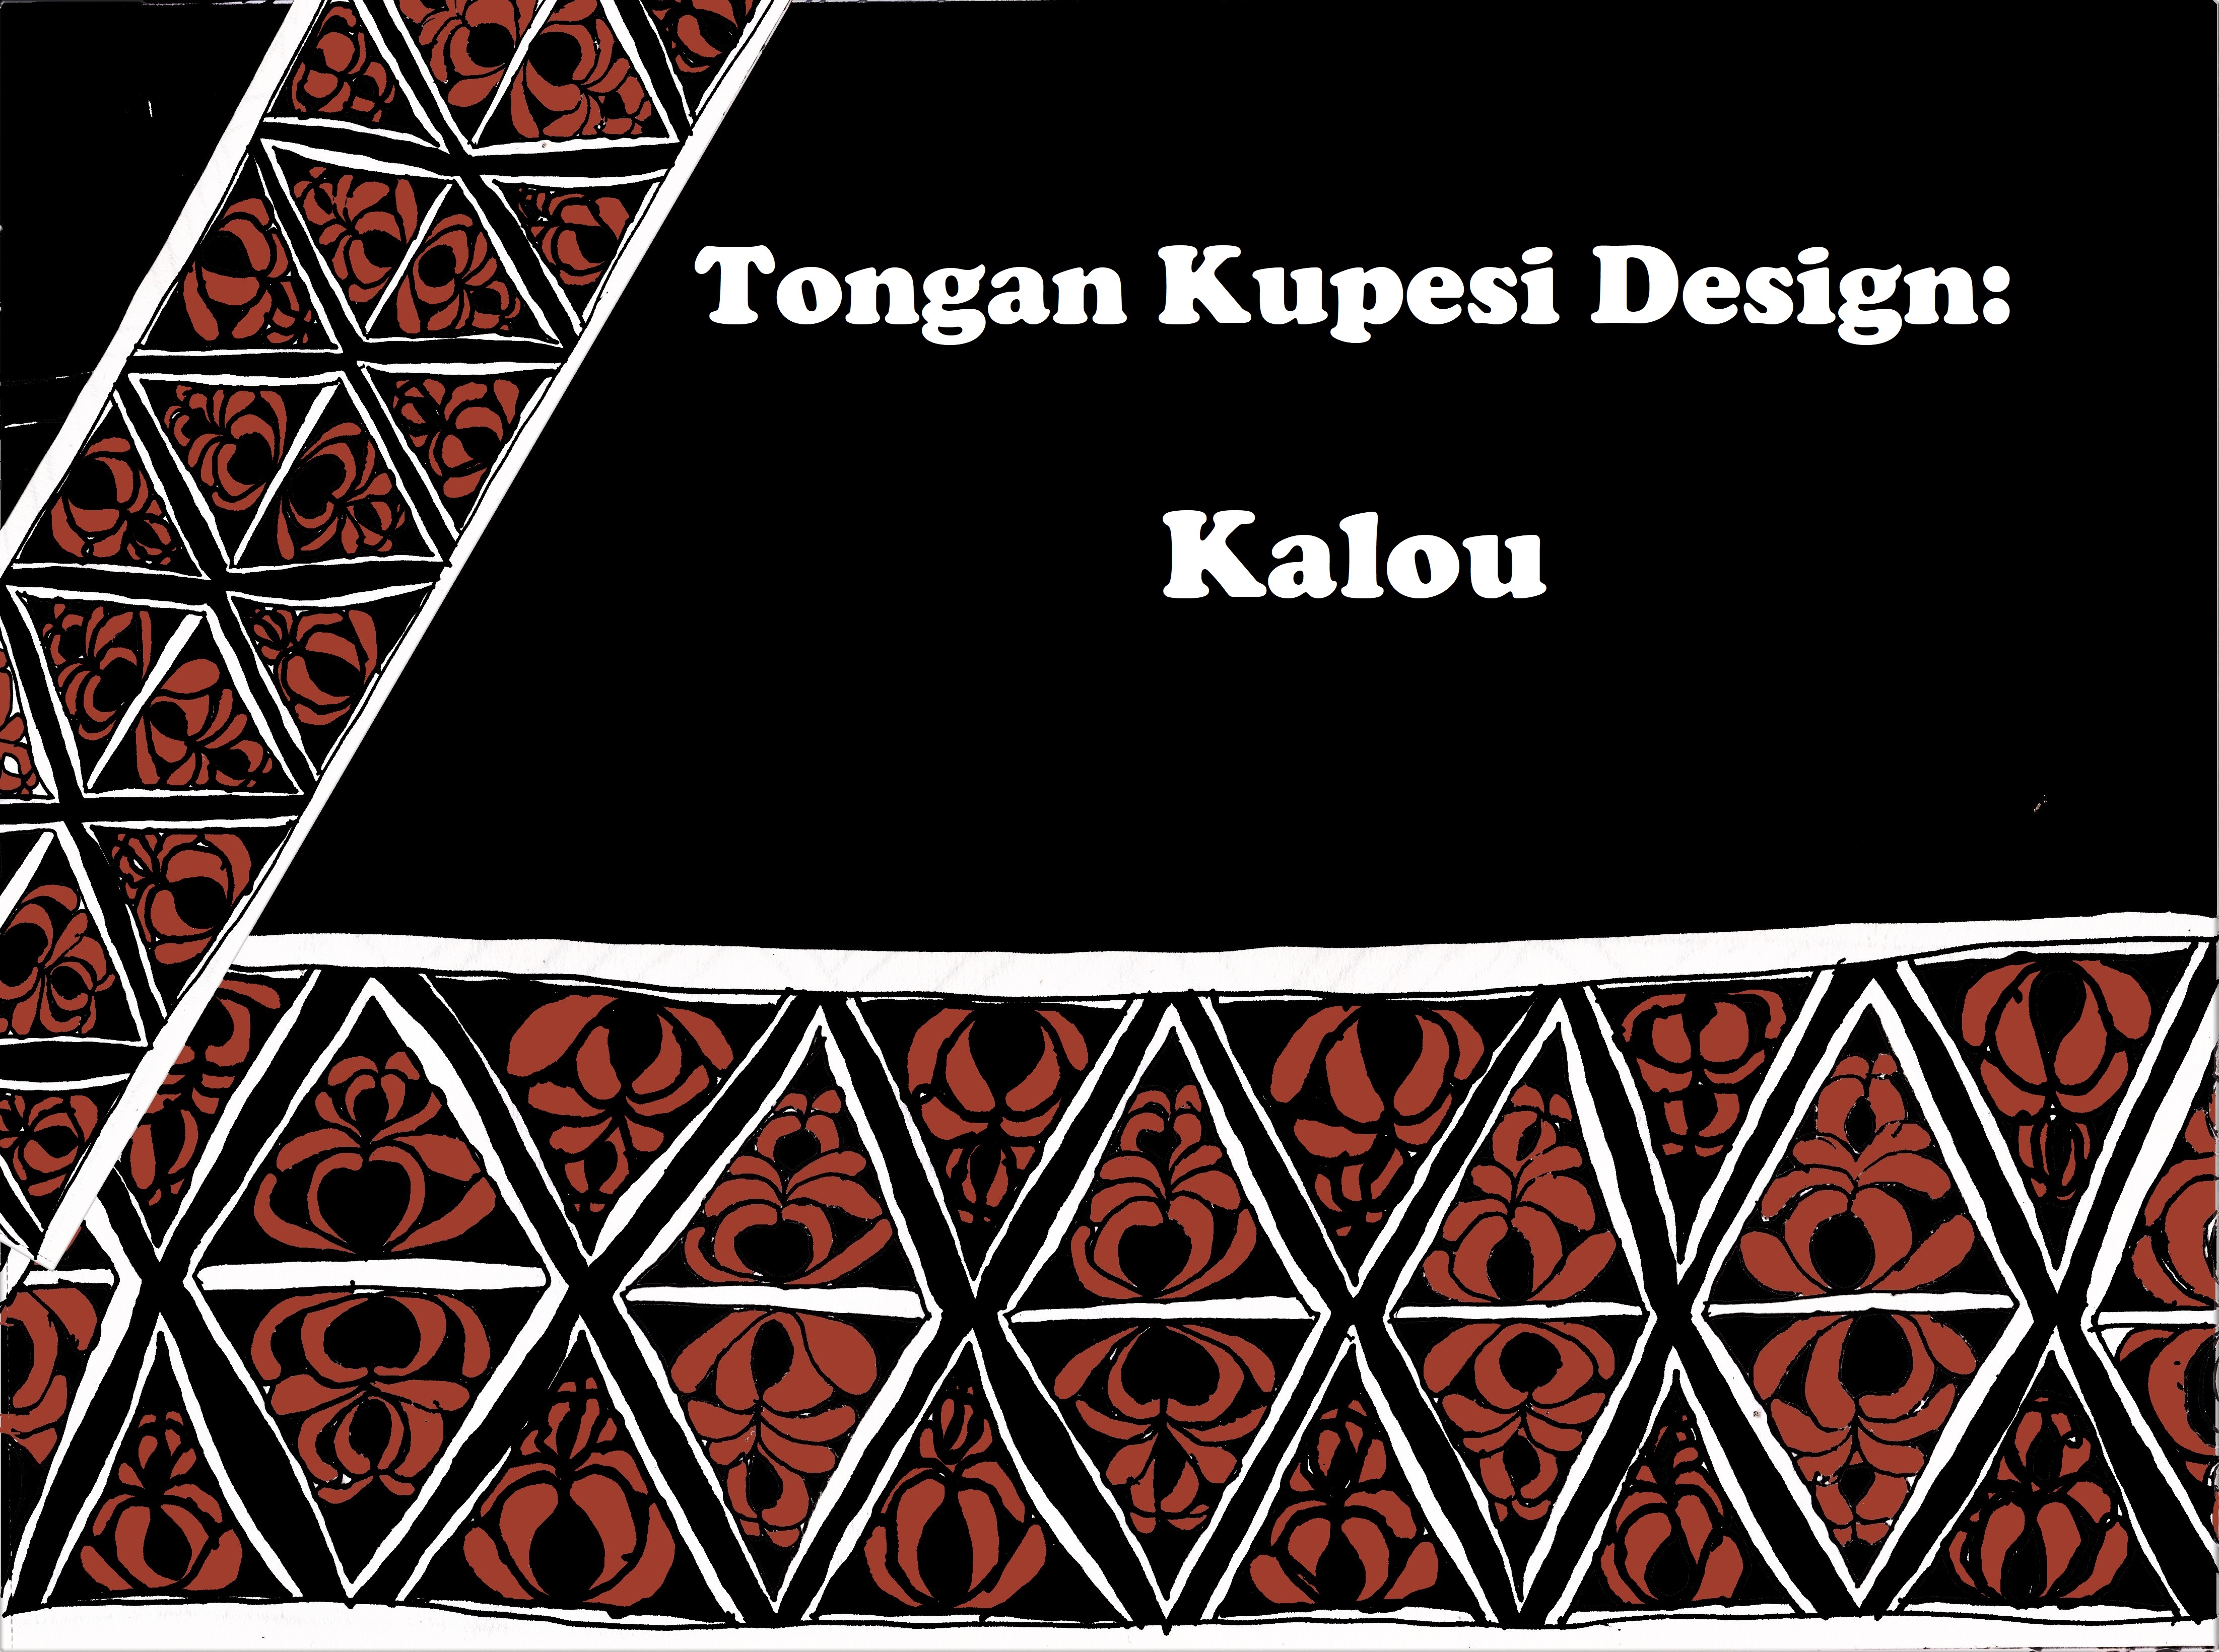 Tongan Kupesi Design: Kalou